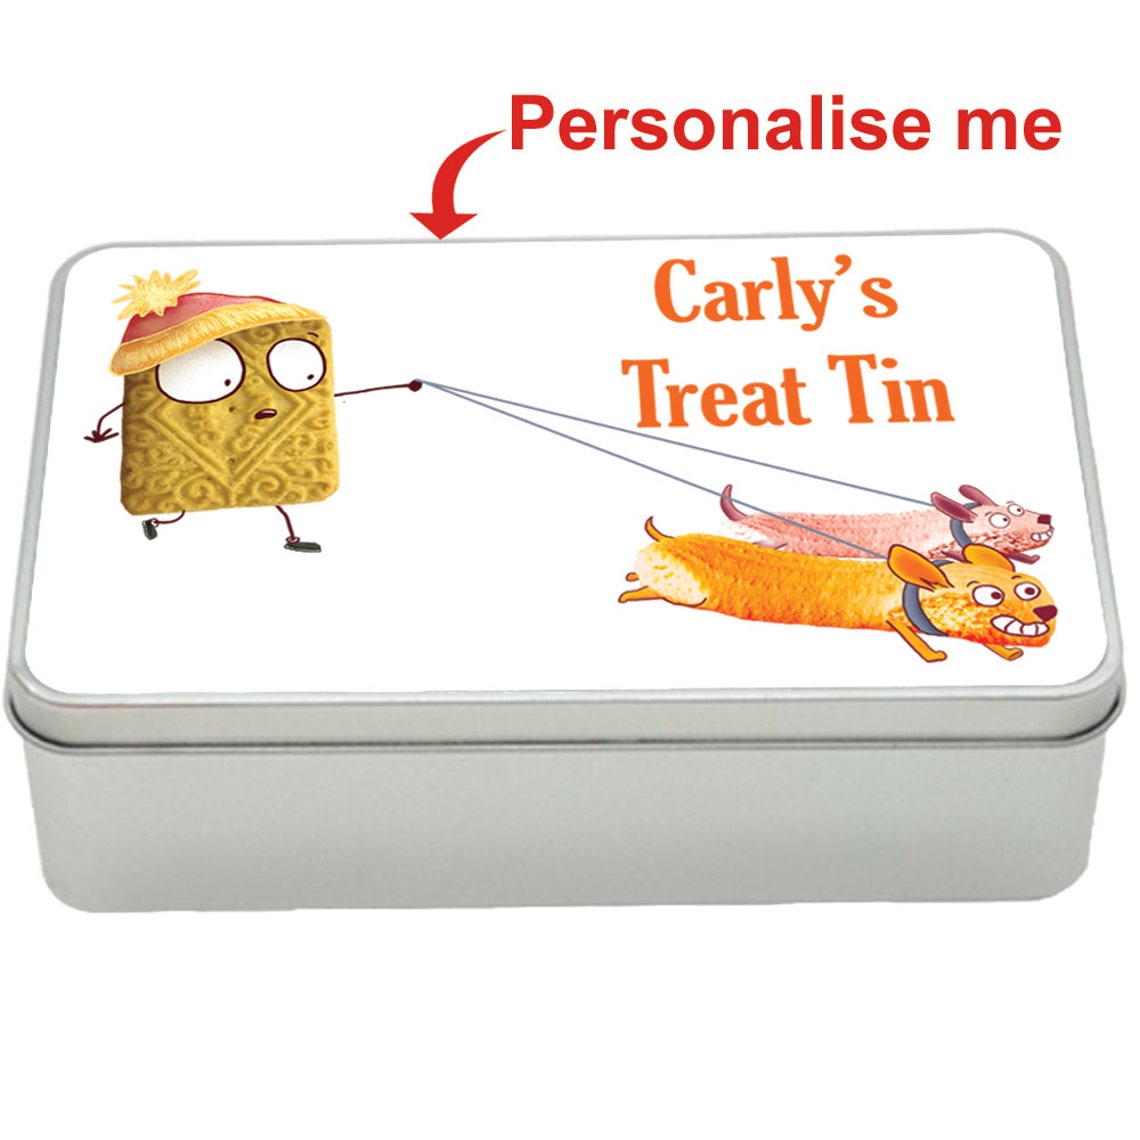 Custard Cream Dog Walk treat tin gift idea, personalised storage tin biscuits